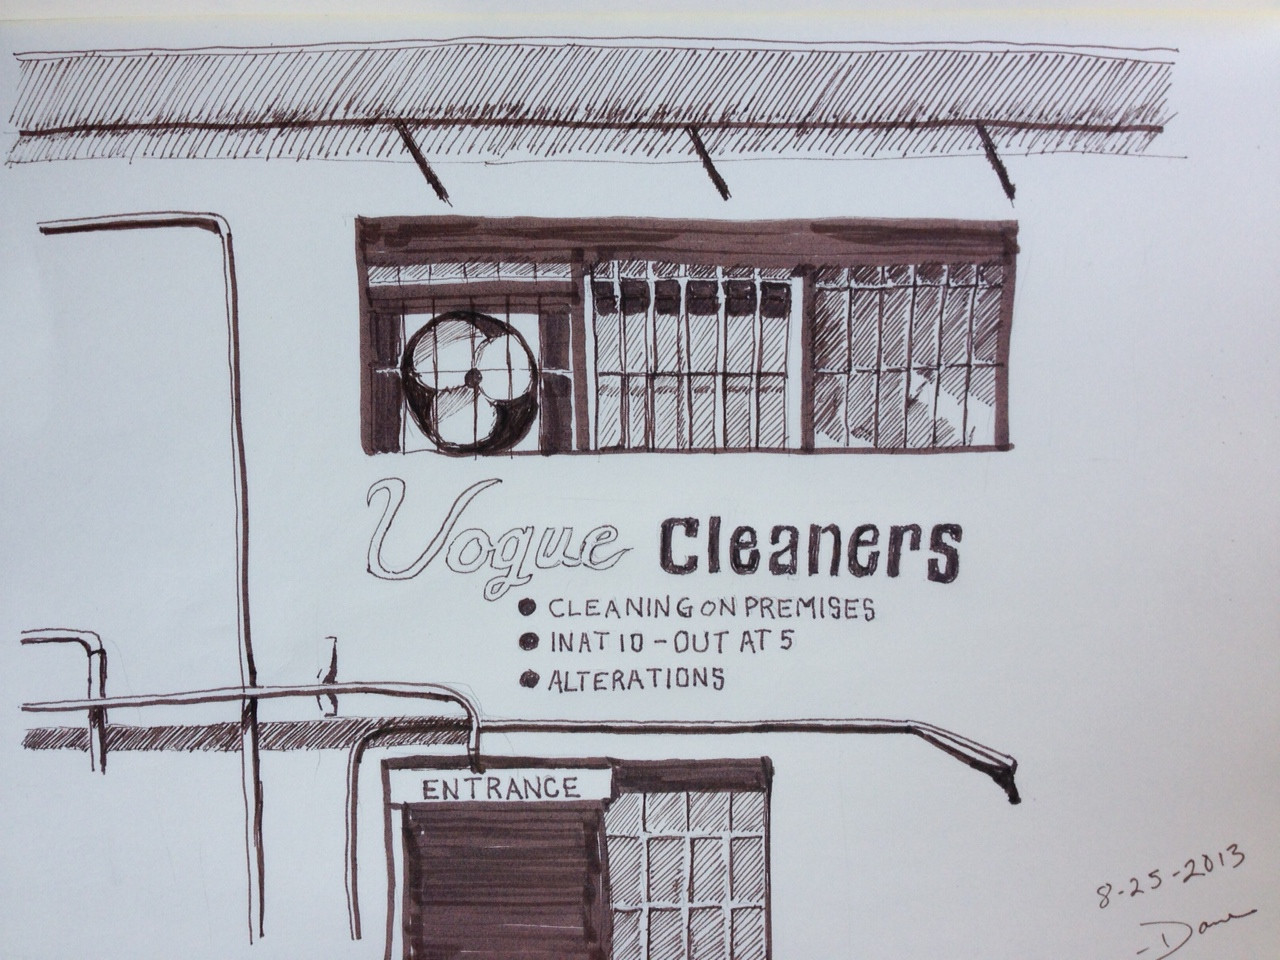 Vogue Cleaners circa 1960s – San Carlos, CA